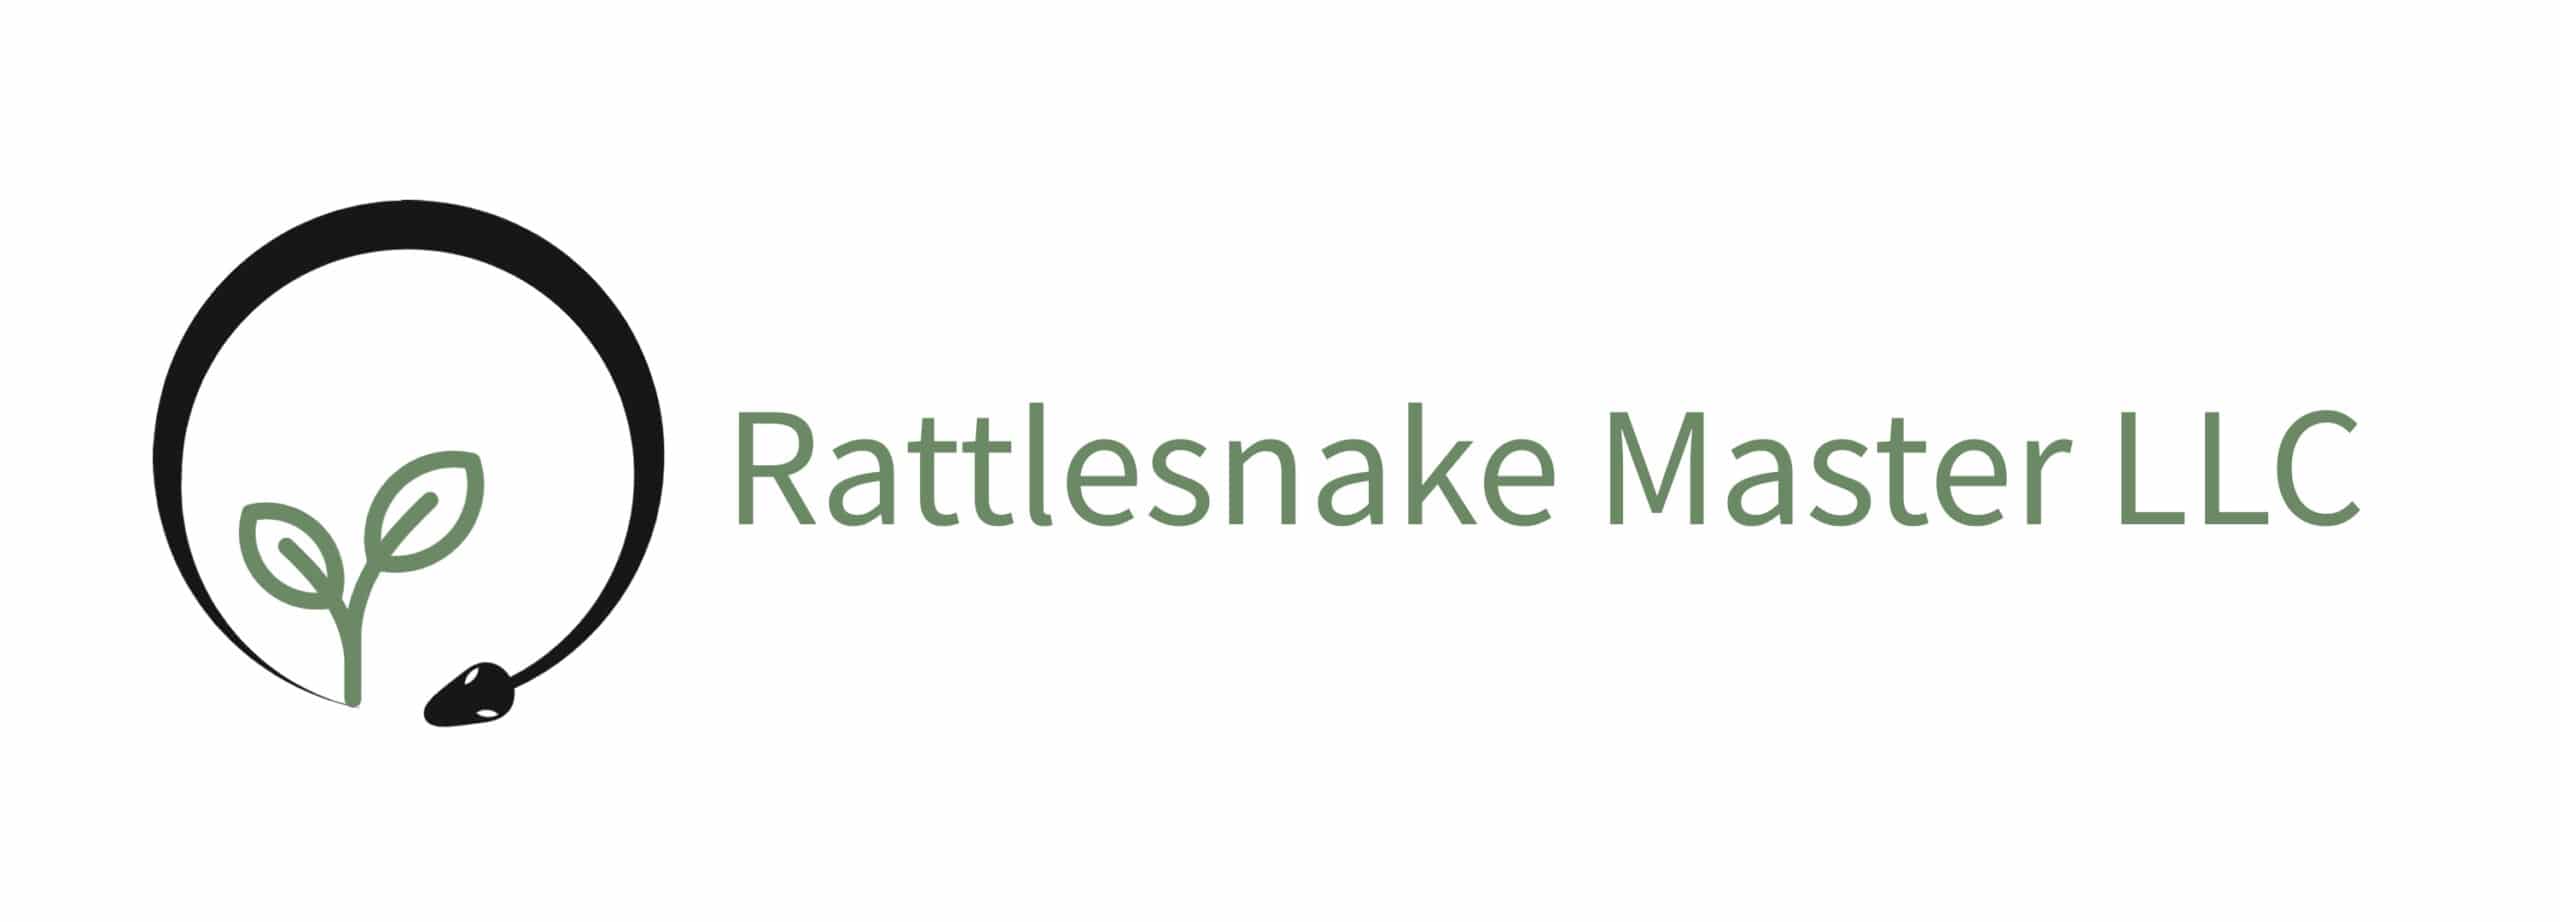 Rattlesnake Master LLC Logo